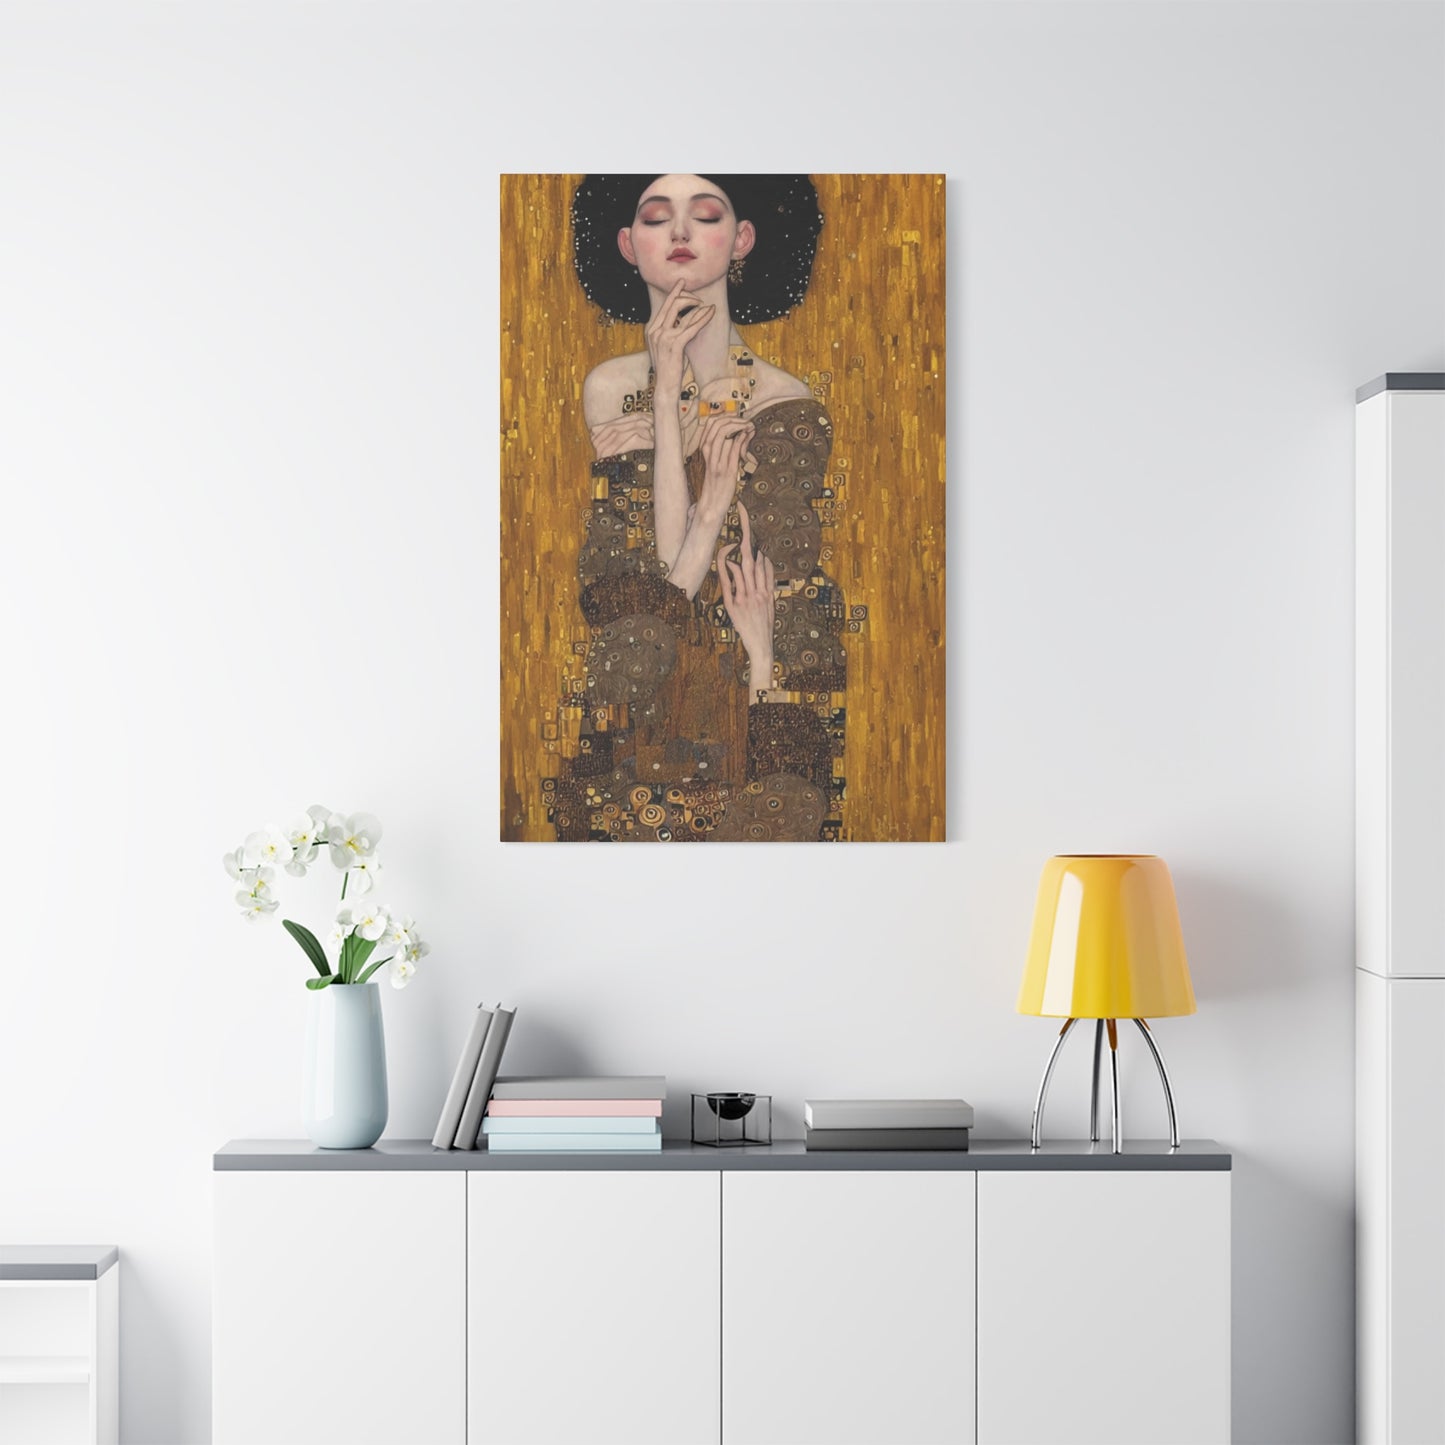 Aesthetic Girl Wall Art & Canvas Prints